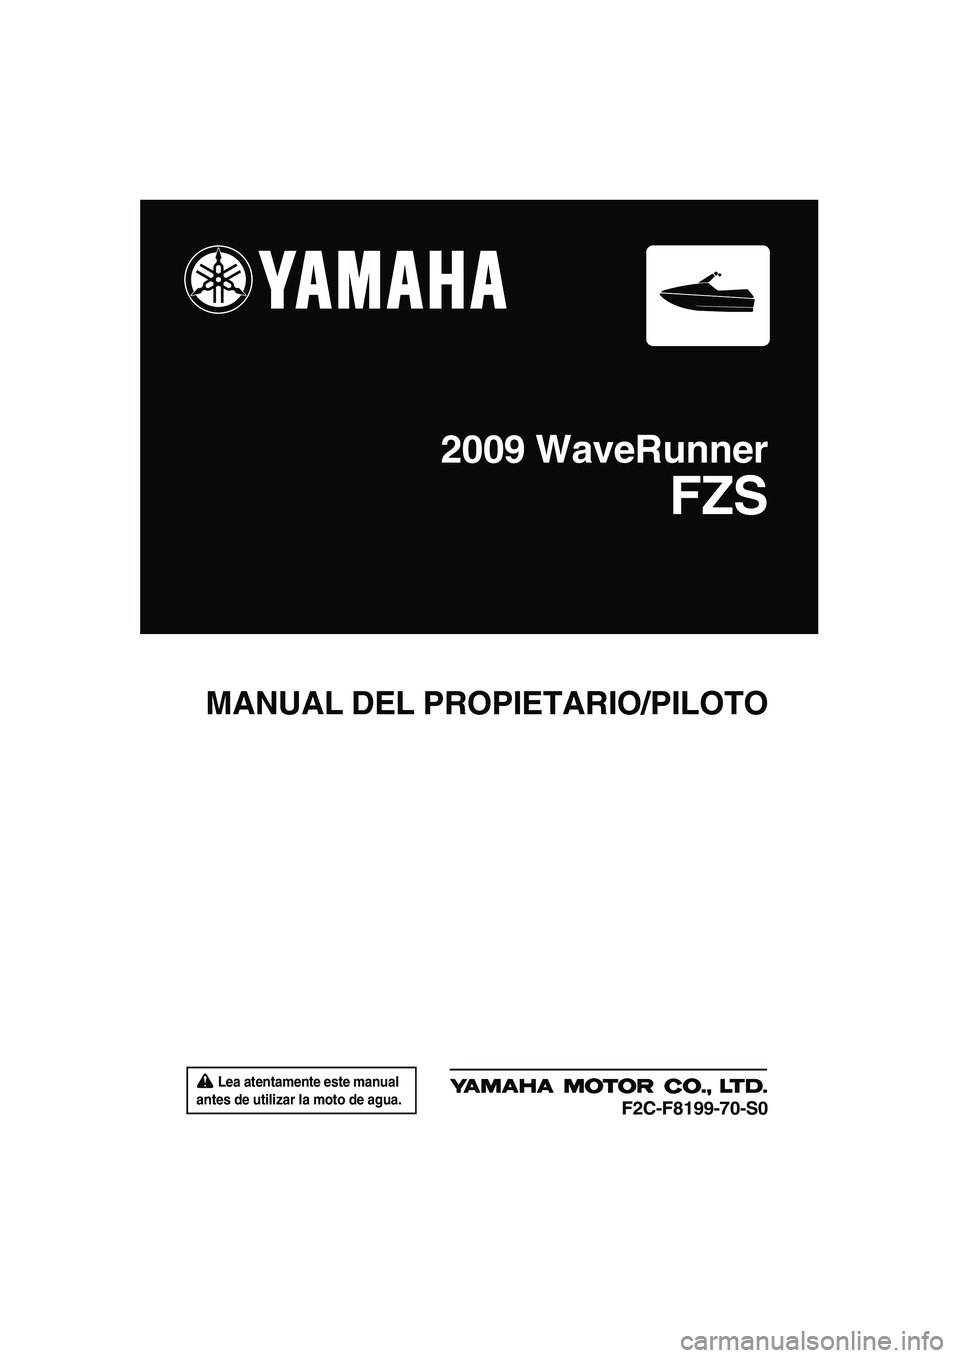 YAMAHA FZS SVHO 2009  Manuale de Empleo (in Spanish)  Lea atentamente este manual 
antes de utilizar la moto de agua.
MANUAL DEL PROPIETARIO/PILOTO
2009 WaveRunner
FZS
F2C-F8199-70-S0
UF2C70S0.book  Page 1  Tuesday, November 4, 2008  4:30 PM 